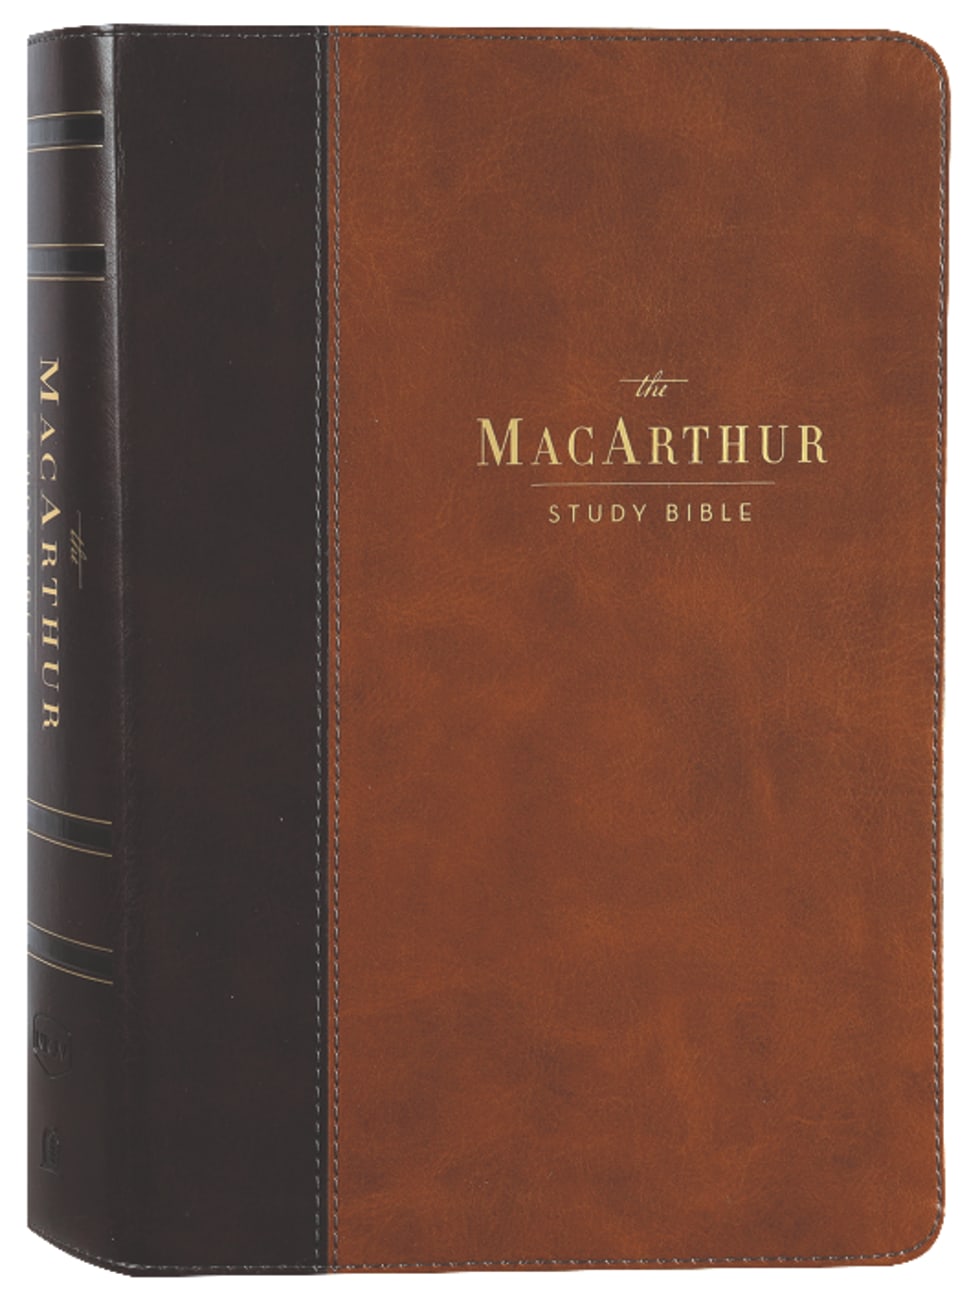 NKJV Macarthur Study Bible Brown (2nd Edition) Premium Imitation Leather